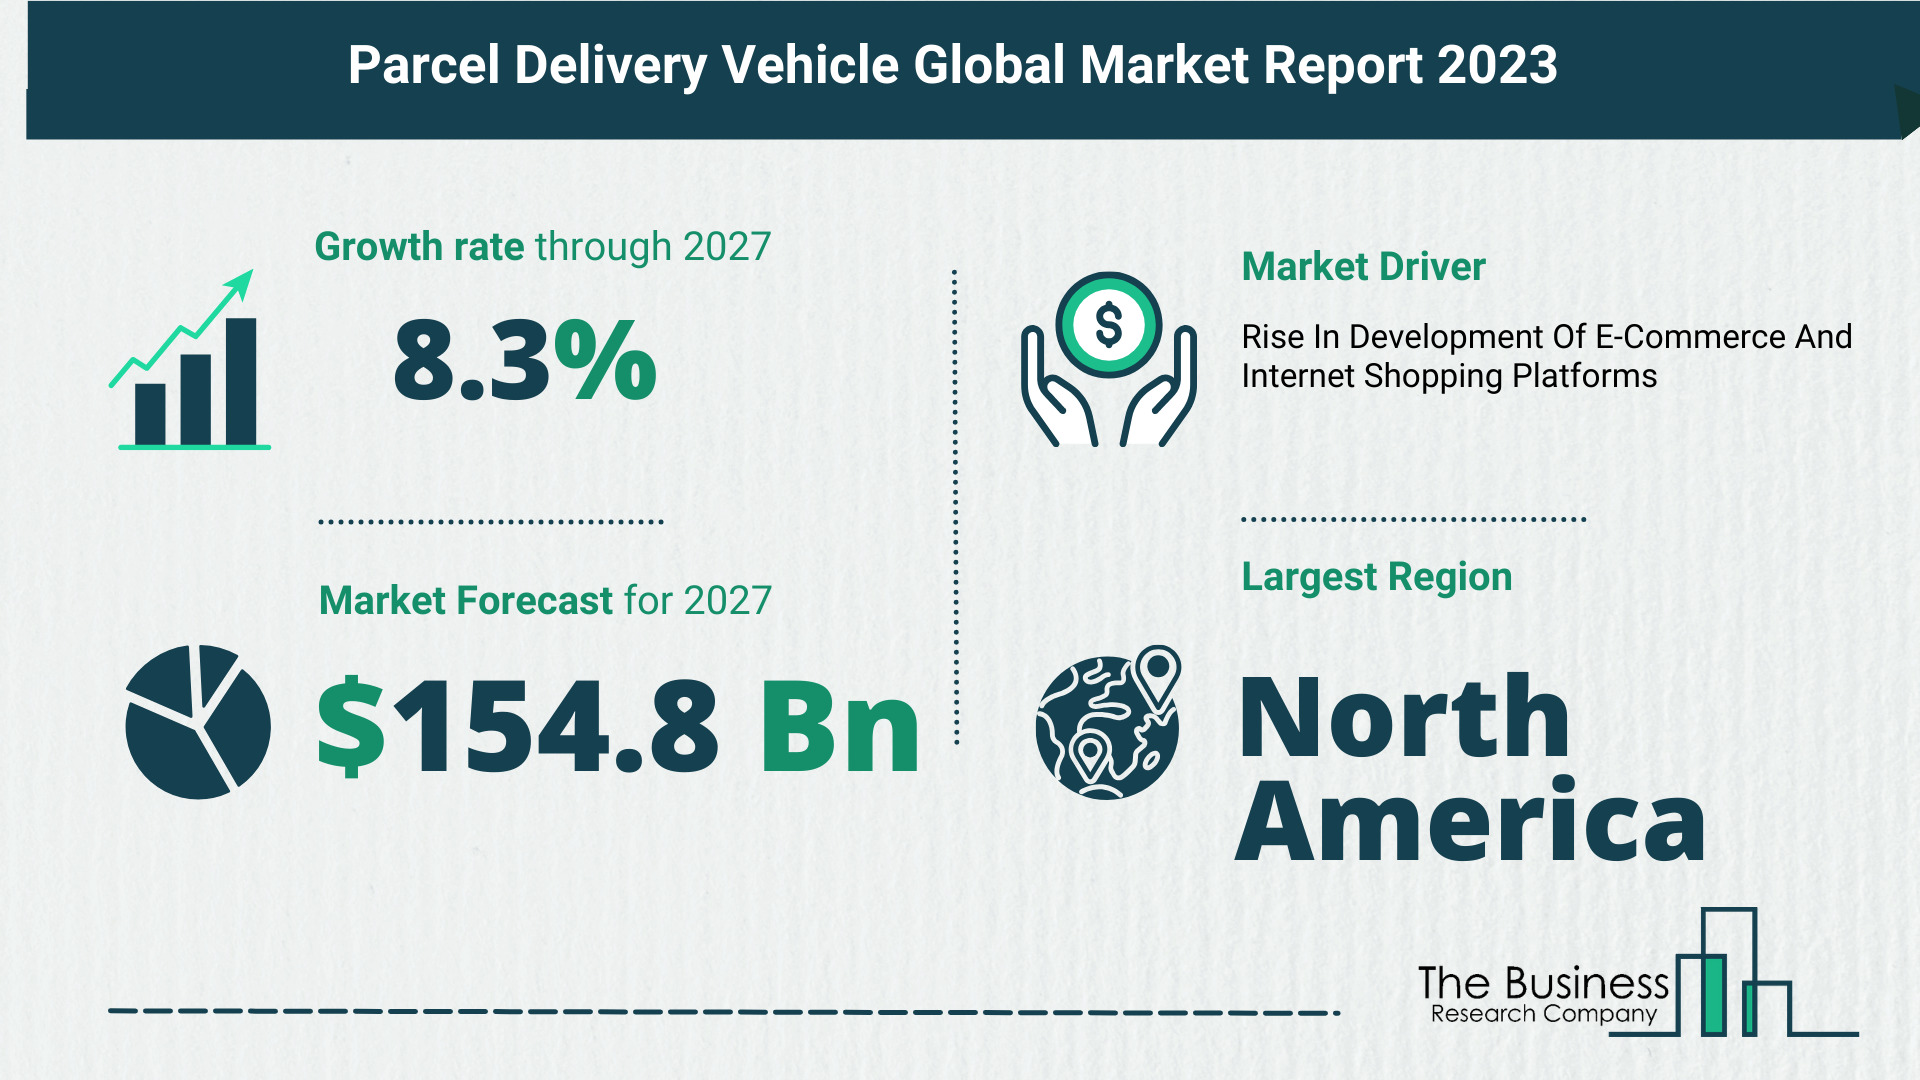 Global Parcel Delivery Vehicle Market Size